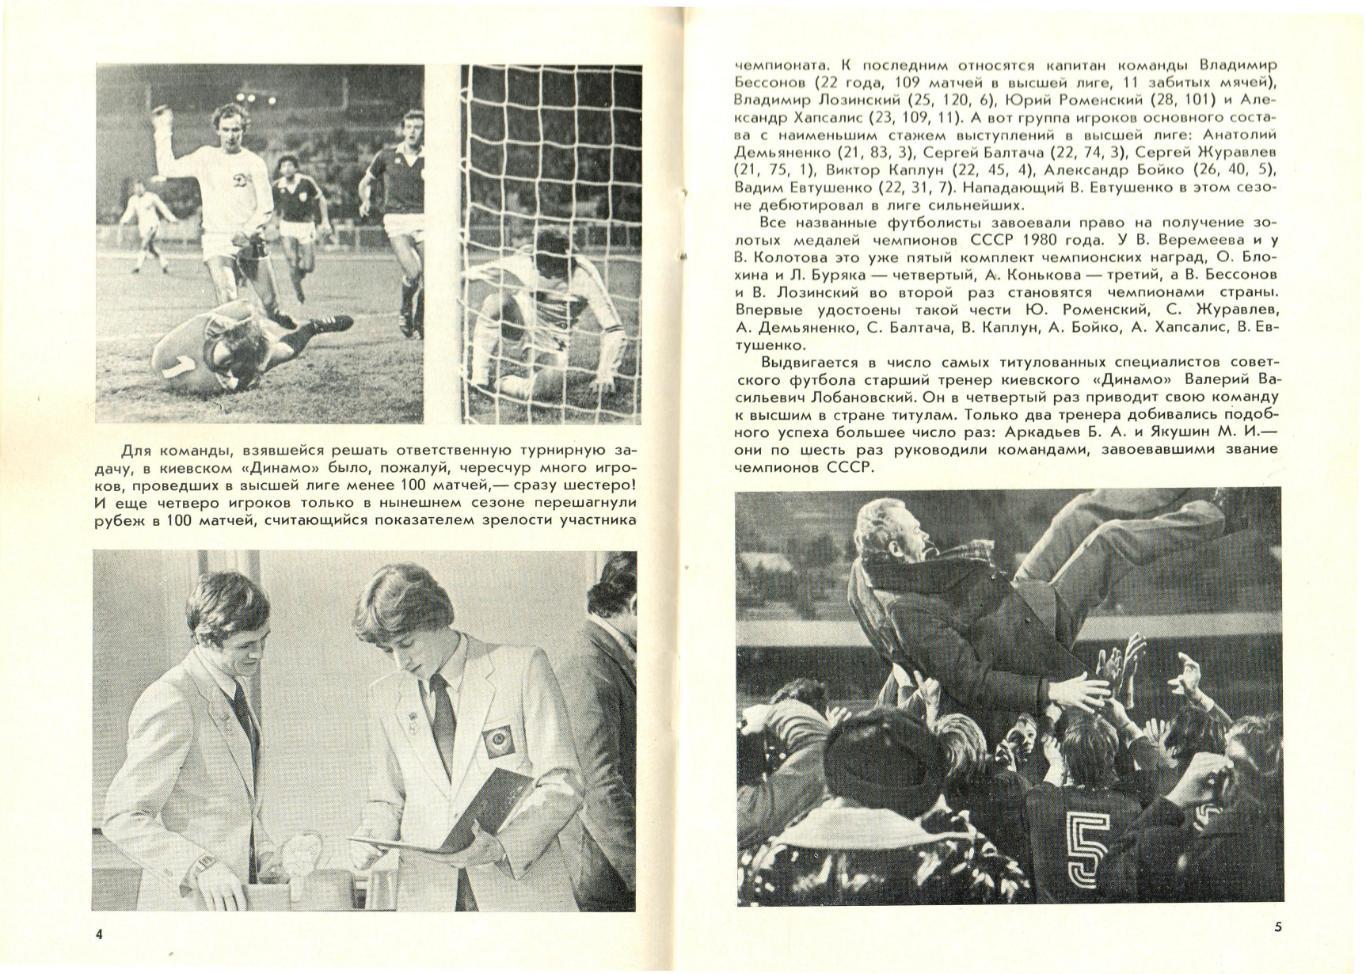 Динамо Киев – чемпион СССР по футболу 1980 2